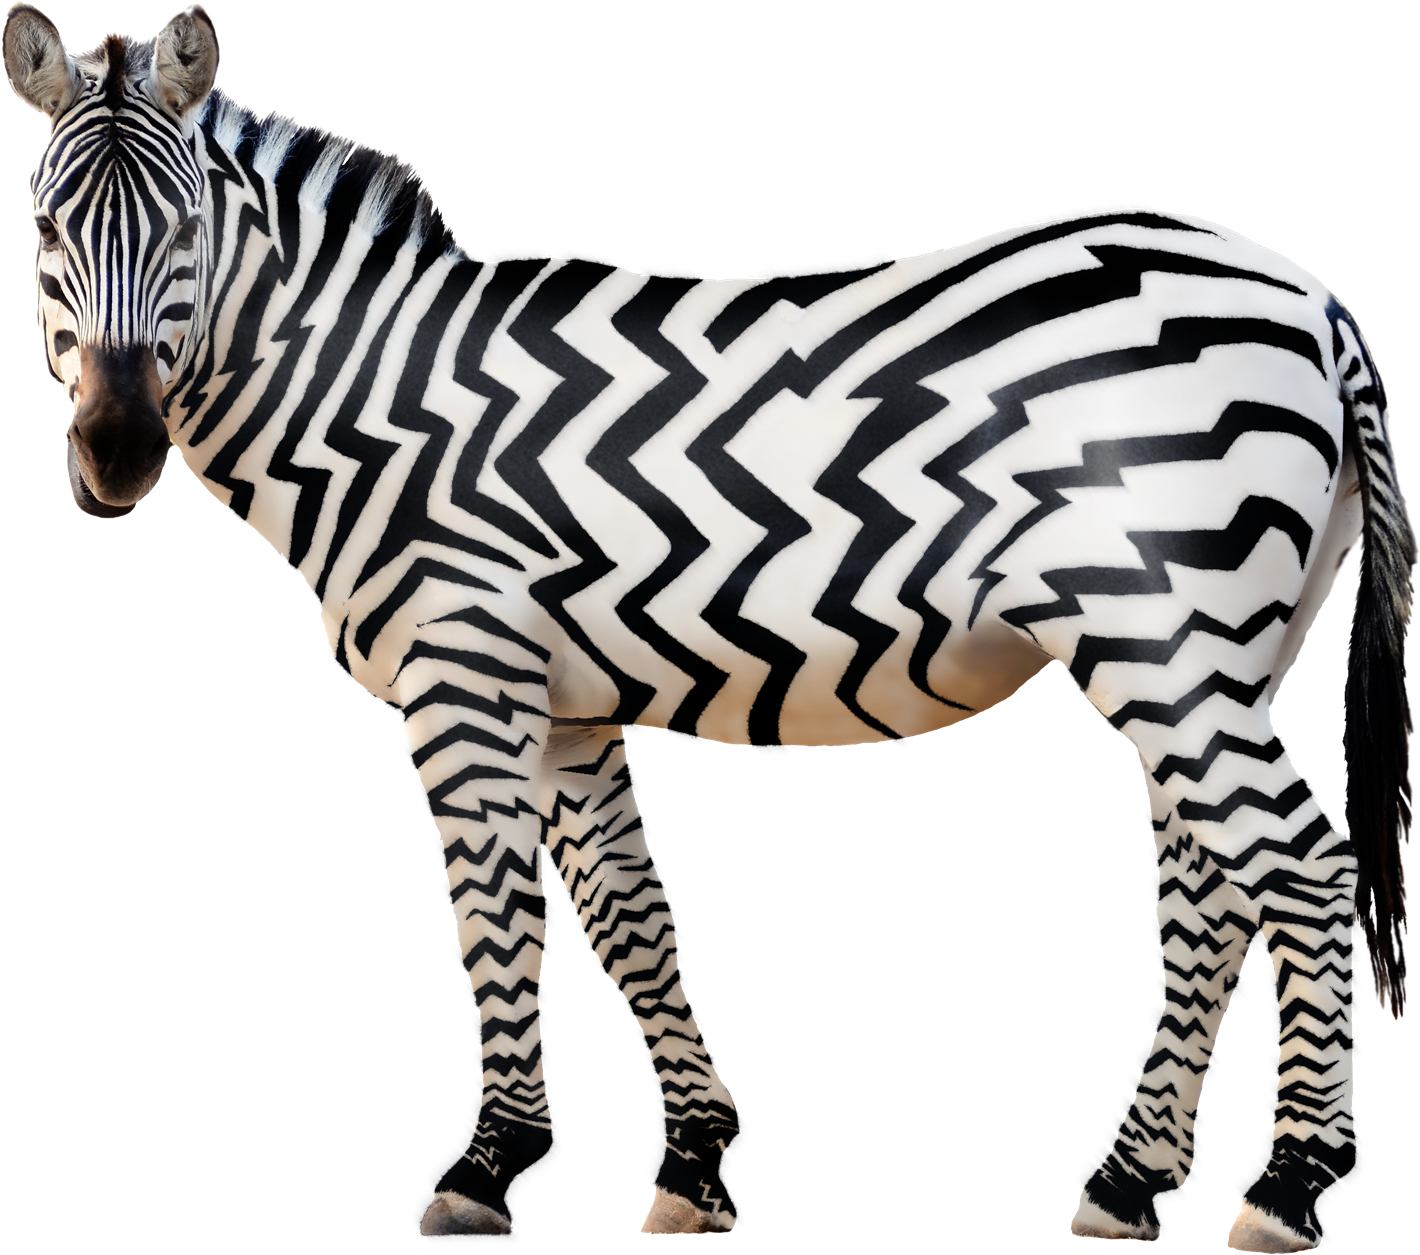 A Zebra With Black And White Stripes